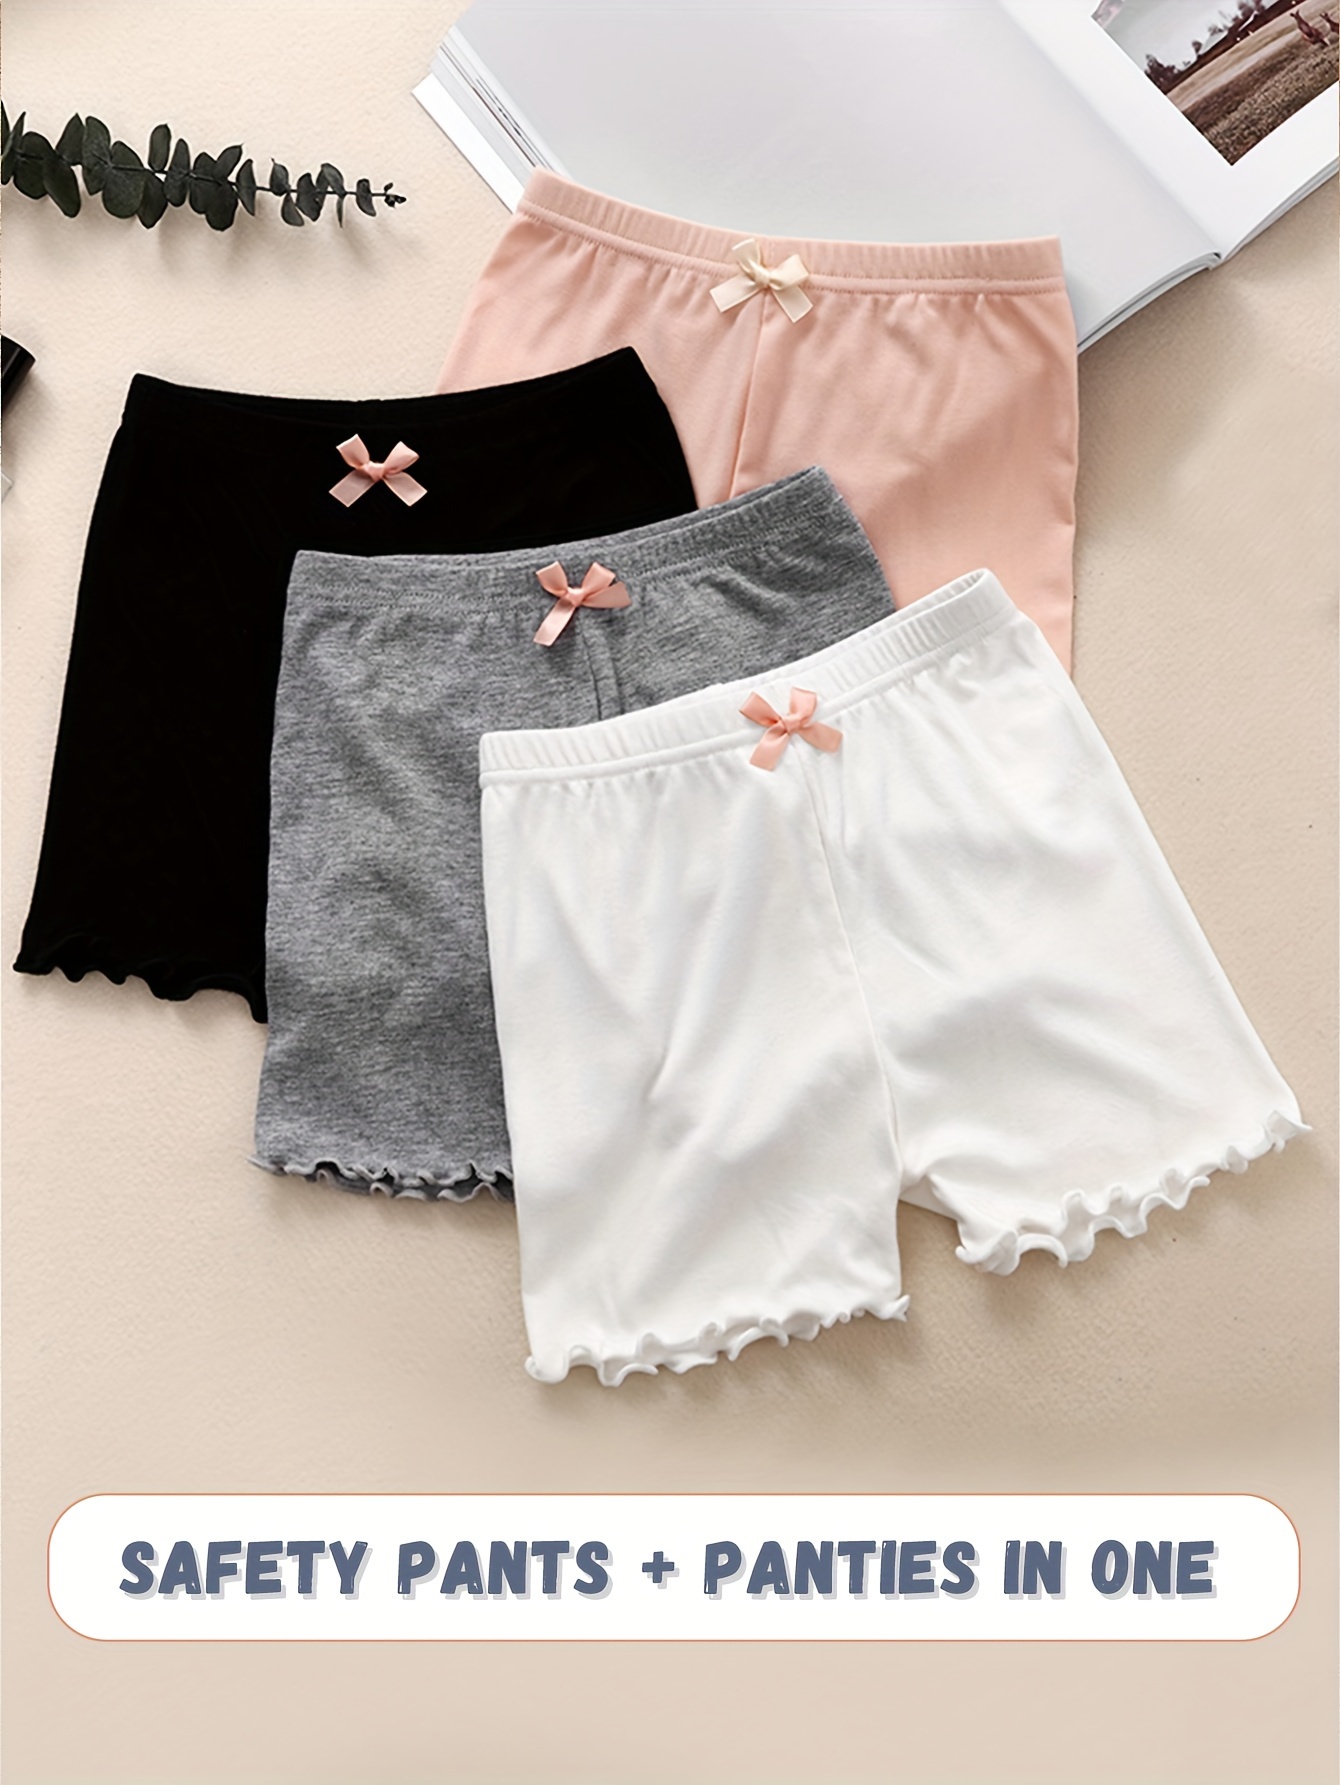 Children Shorts Underwear - Boys Cotton Panties - 4pcs